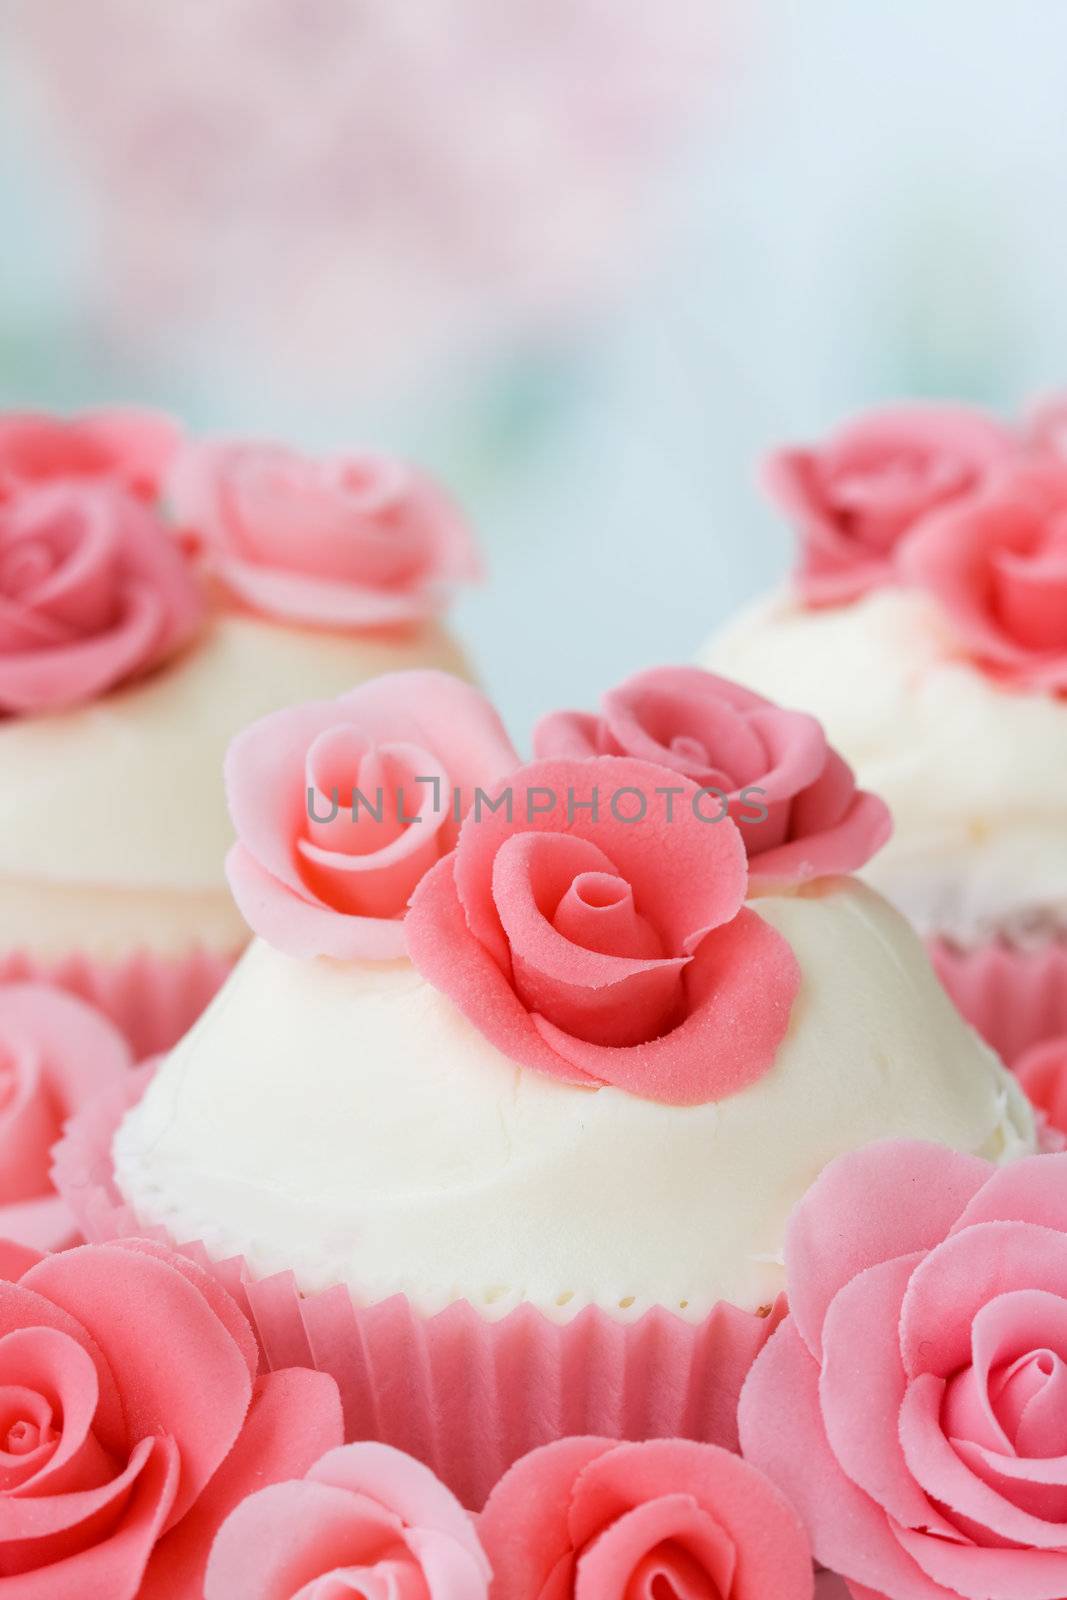 Wedding cupcakes by RuthBlack